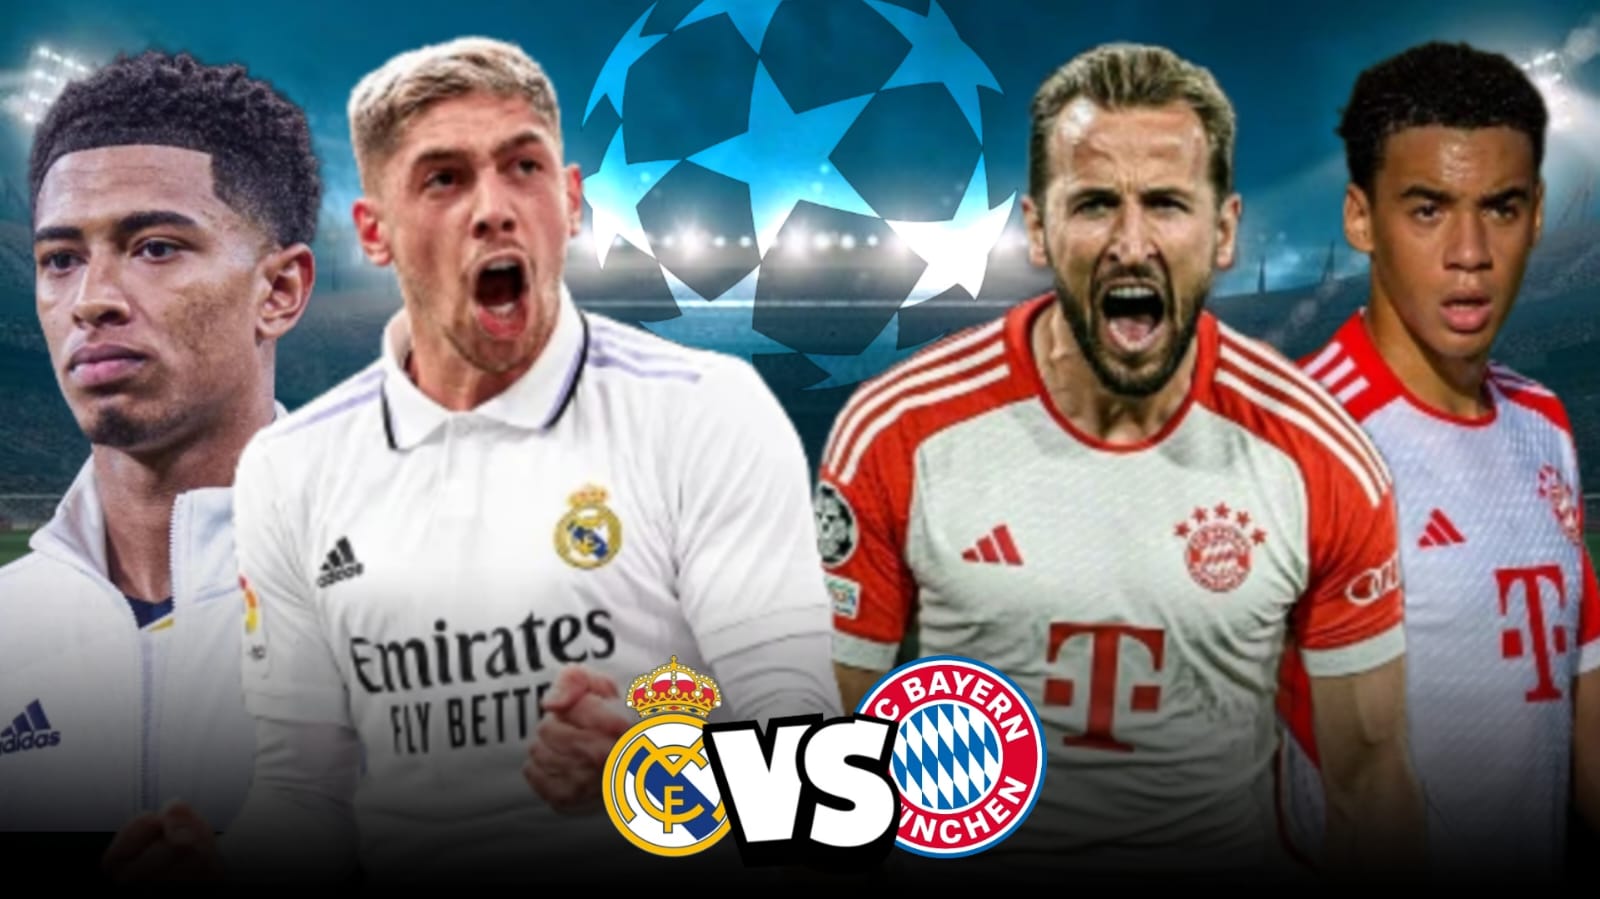 UCL Semis: Real Madrid vs Bayern Munich - Preview